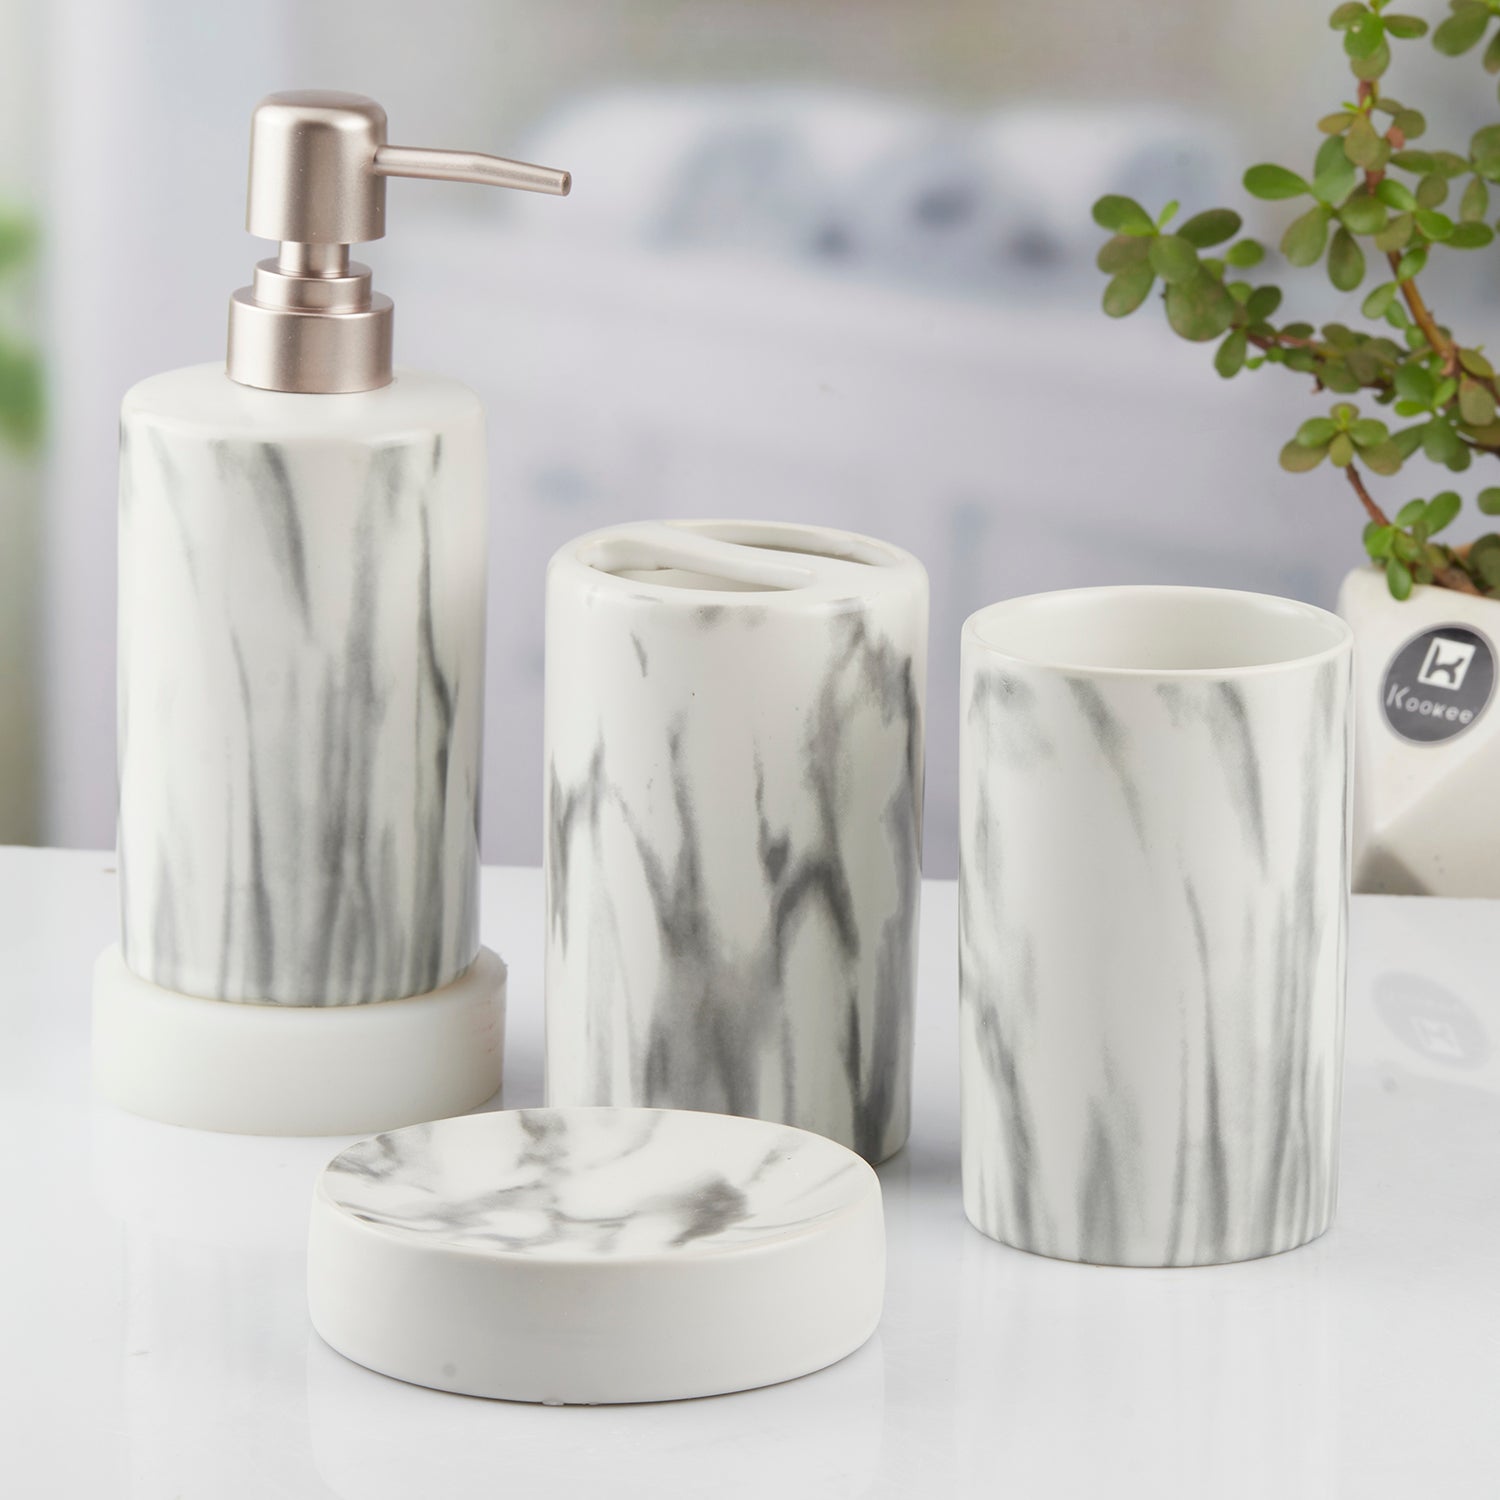 Ceramic Bathroom Set of 4 with Soap Dispenser (10425)